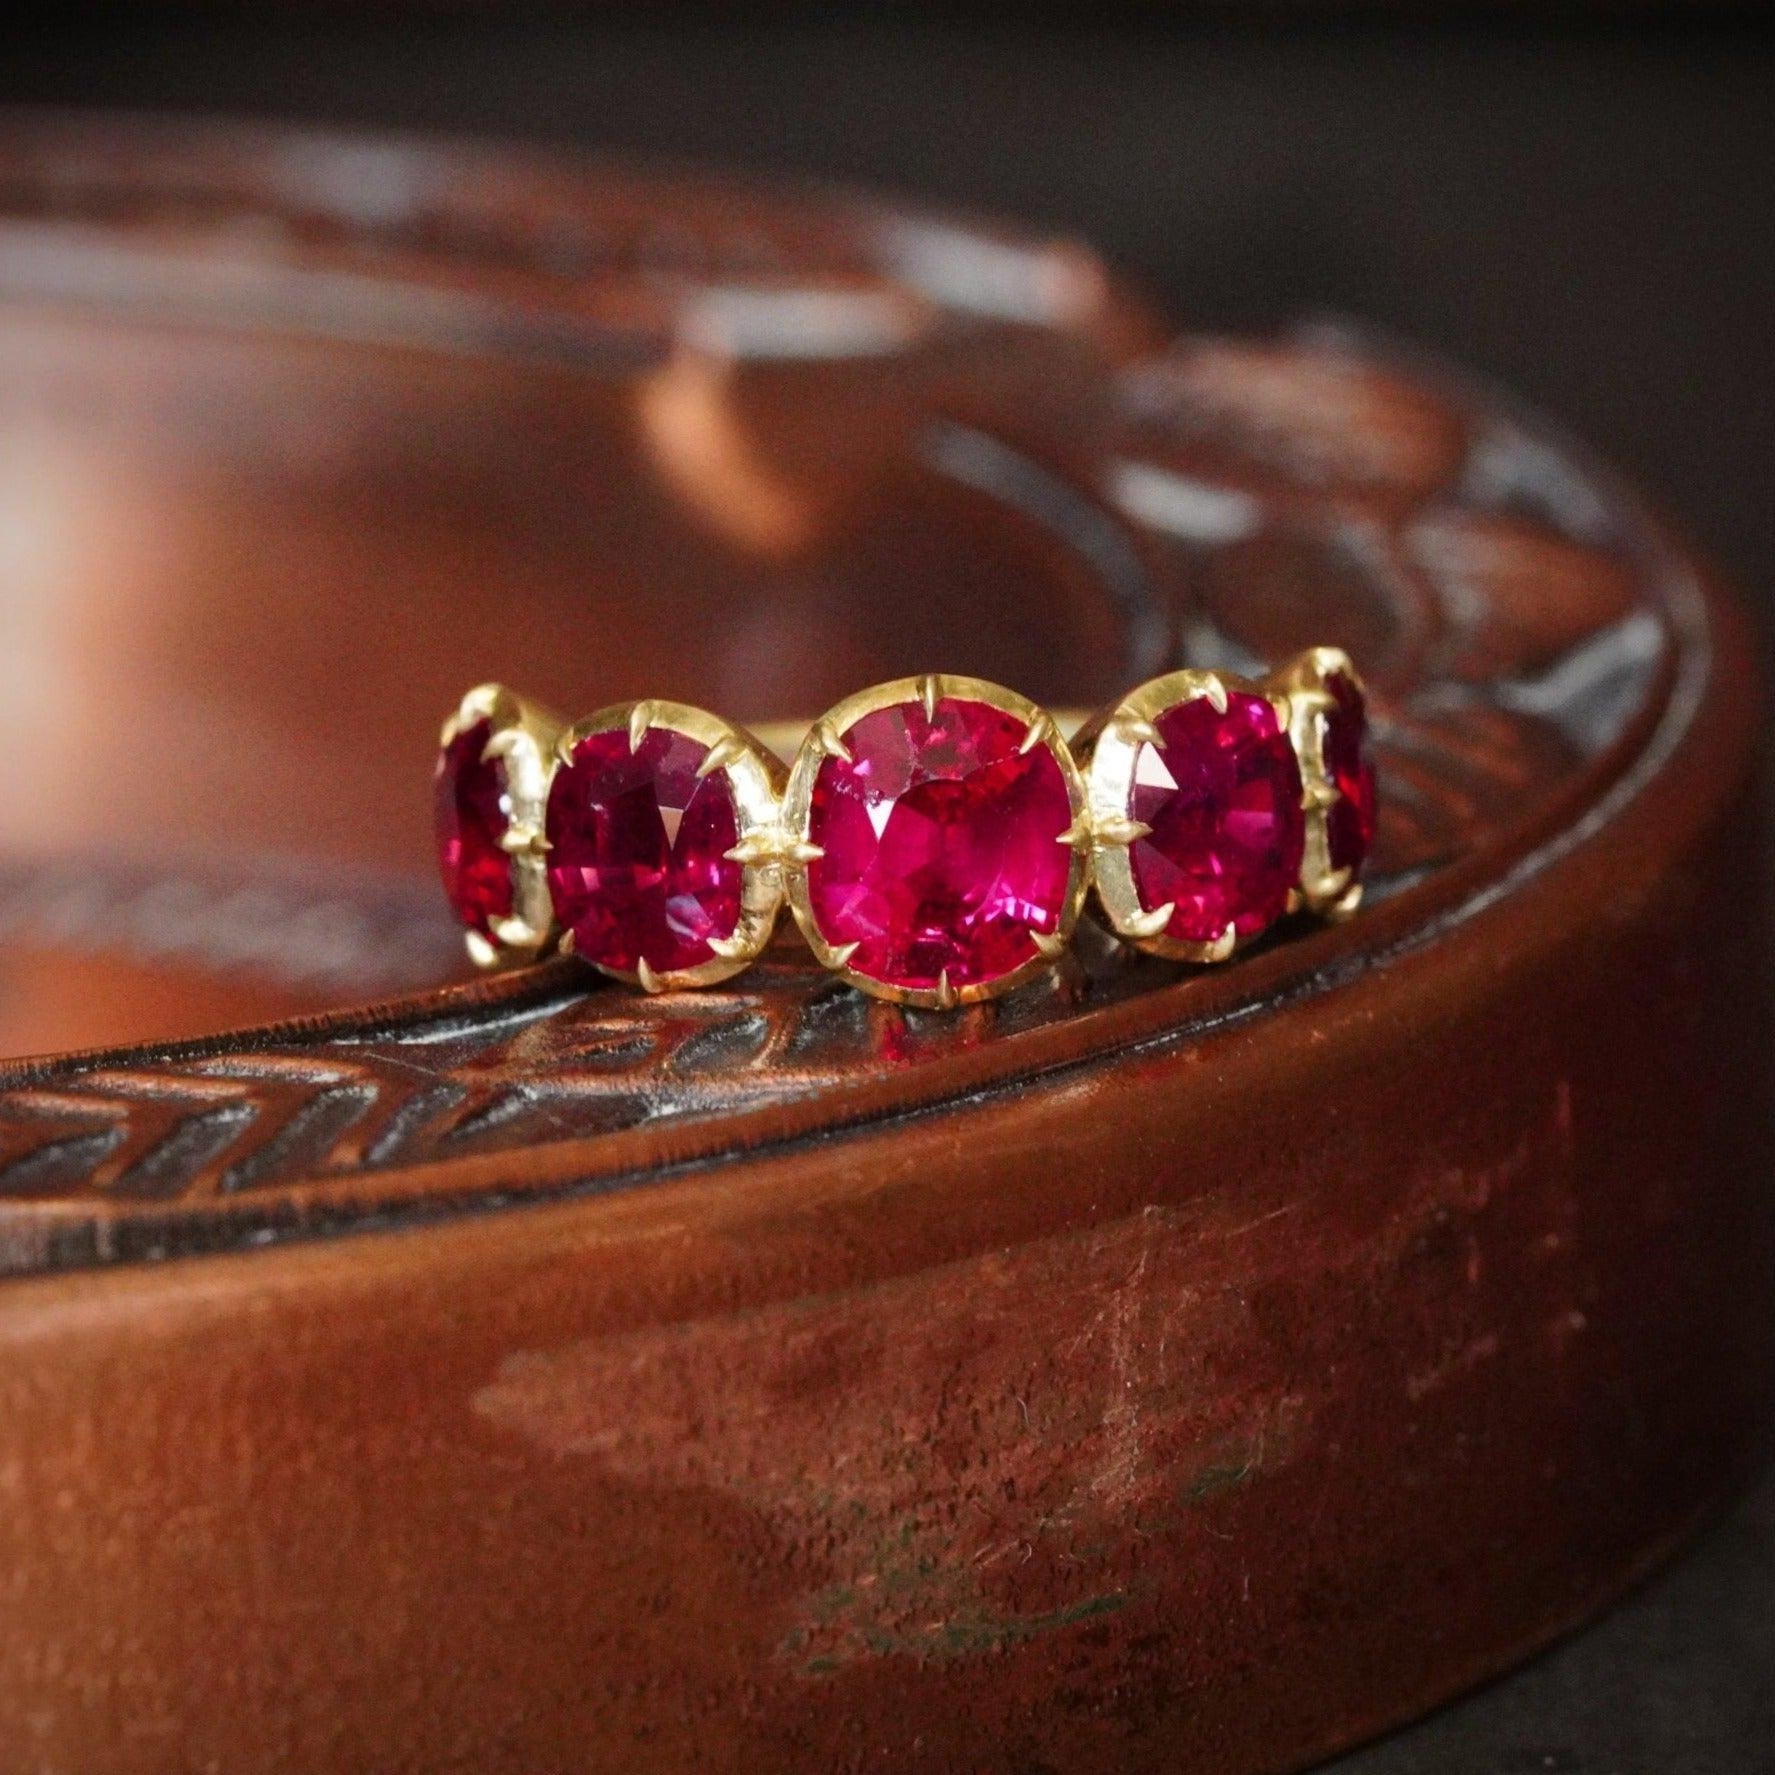 Victorian Style 5.86 Carat Burma Ruby Ring in 18K GoldVictorian Style 5.86 Carat Burma Ruby Ring in 18K Gold